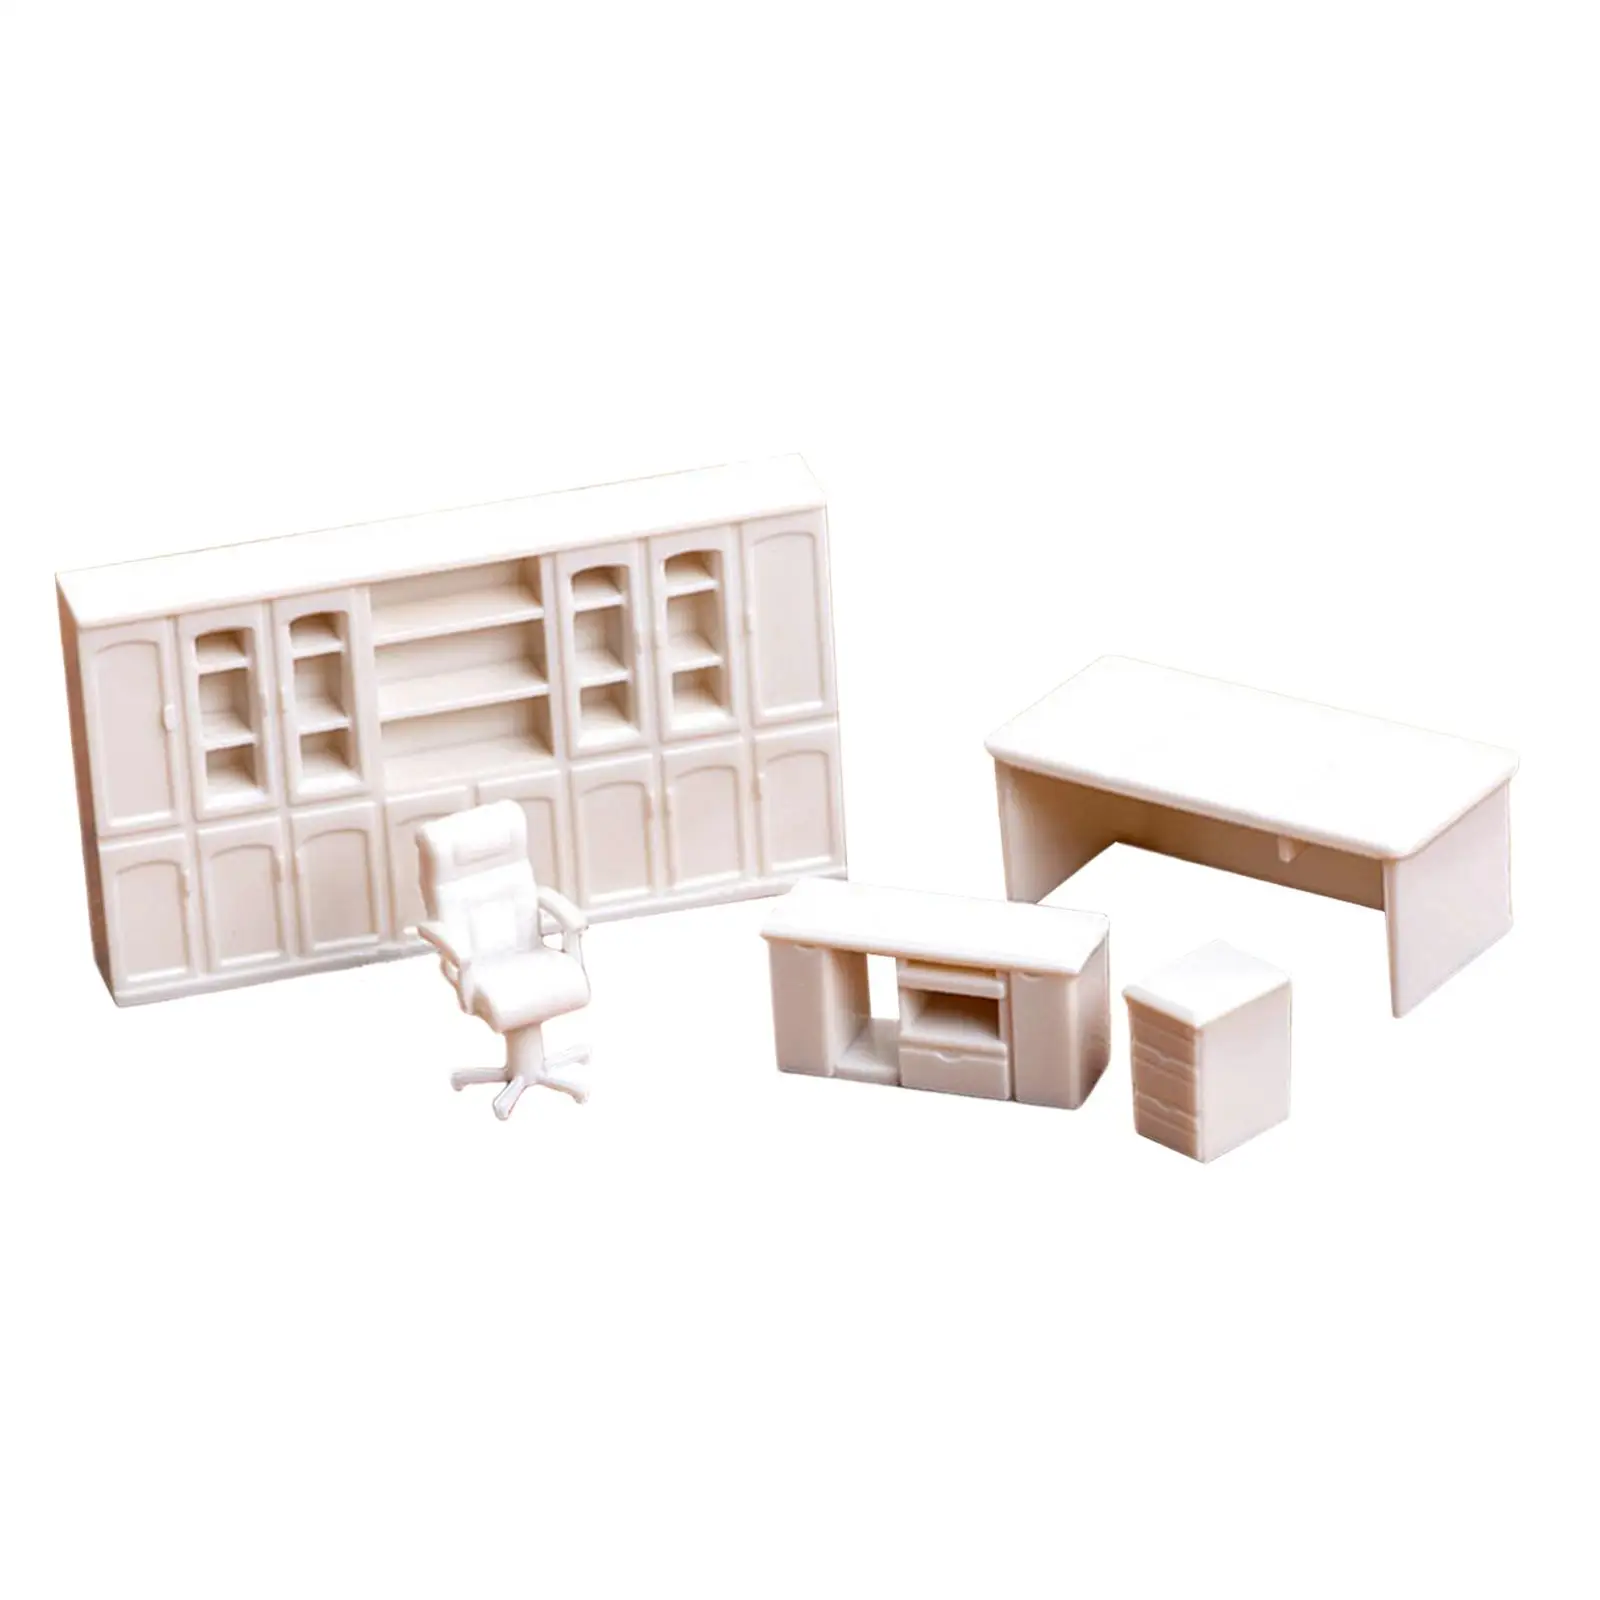 Mini Furniture Model Realistic 1/50 Scale Furniture Model for Sand Table Decoration DIY Scene Ornament Photo Prop Diorama Layout